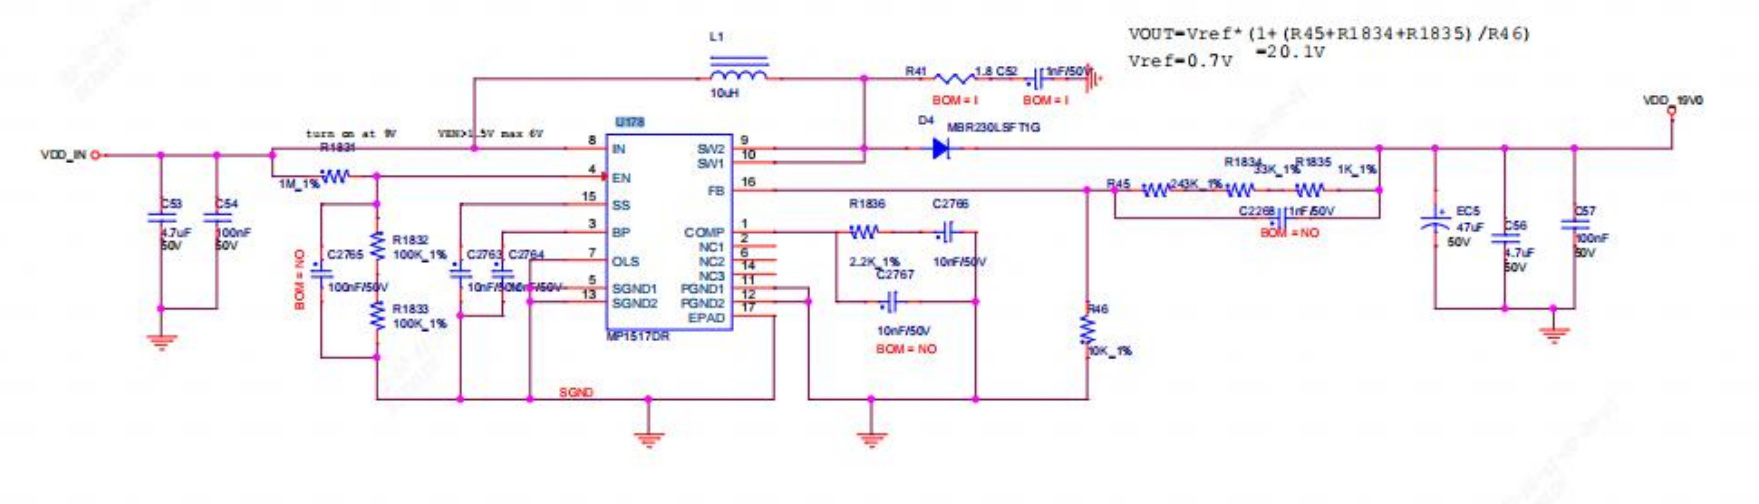 S19K Pro boost circuit schematic diagram